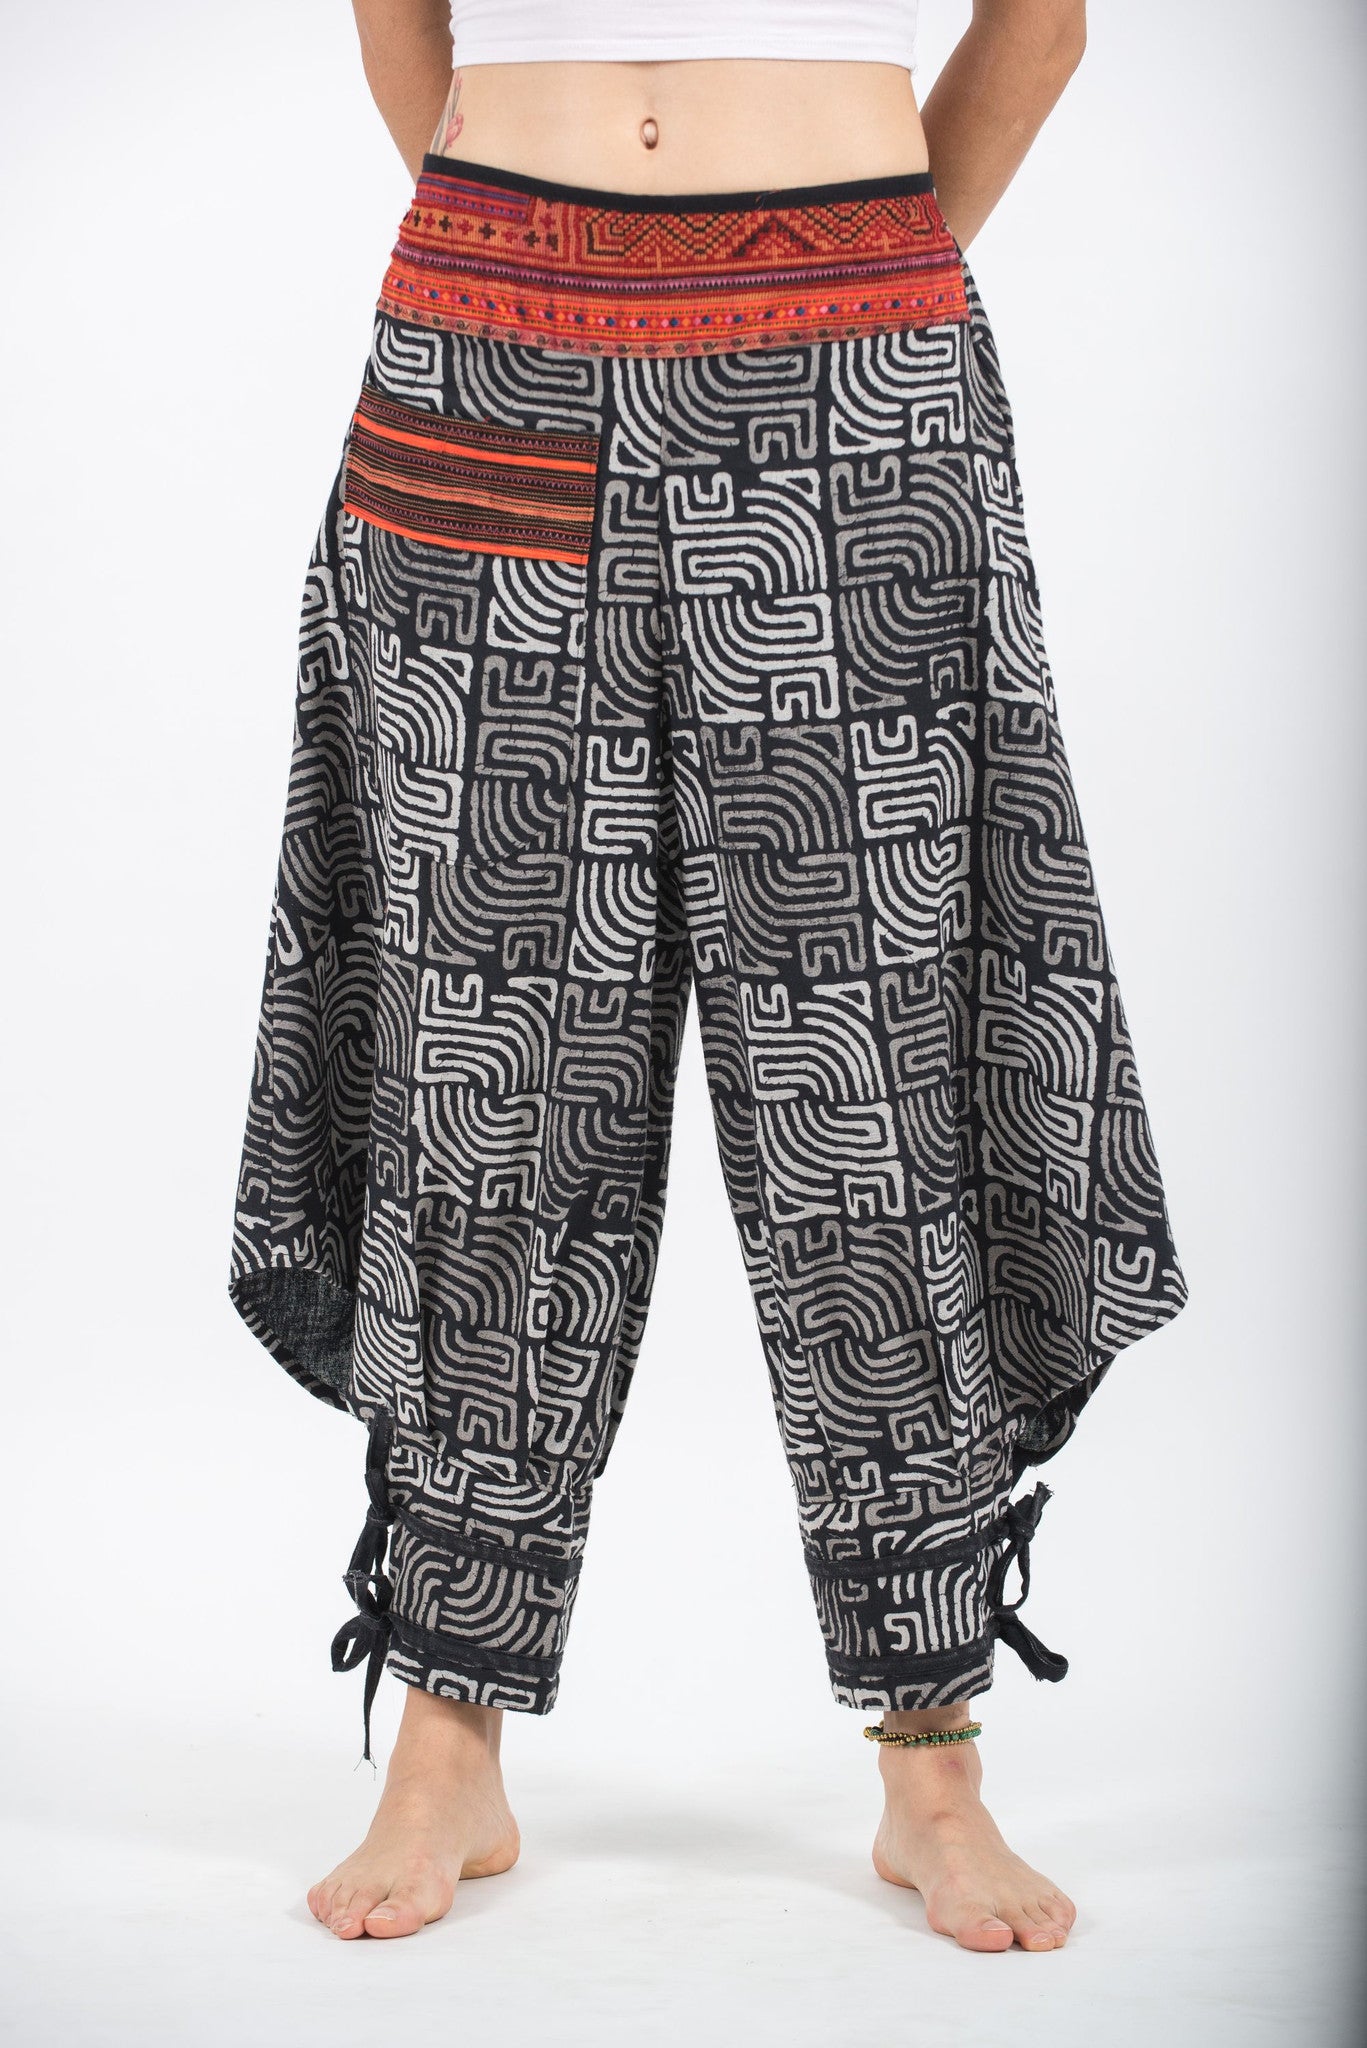 Harem Pants for sale in Centerfield, Utah, Facebook Marketplace